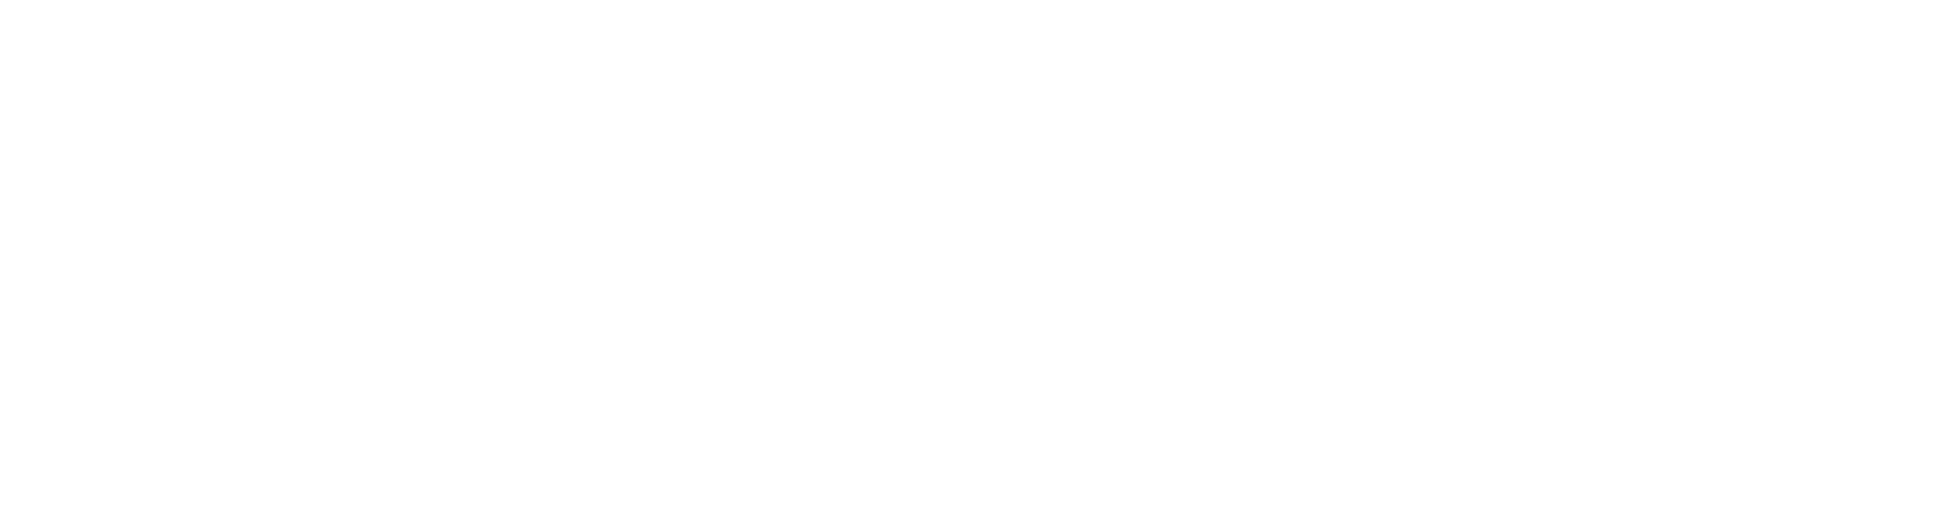 ONE GIANT LEAP Logo (B&W)